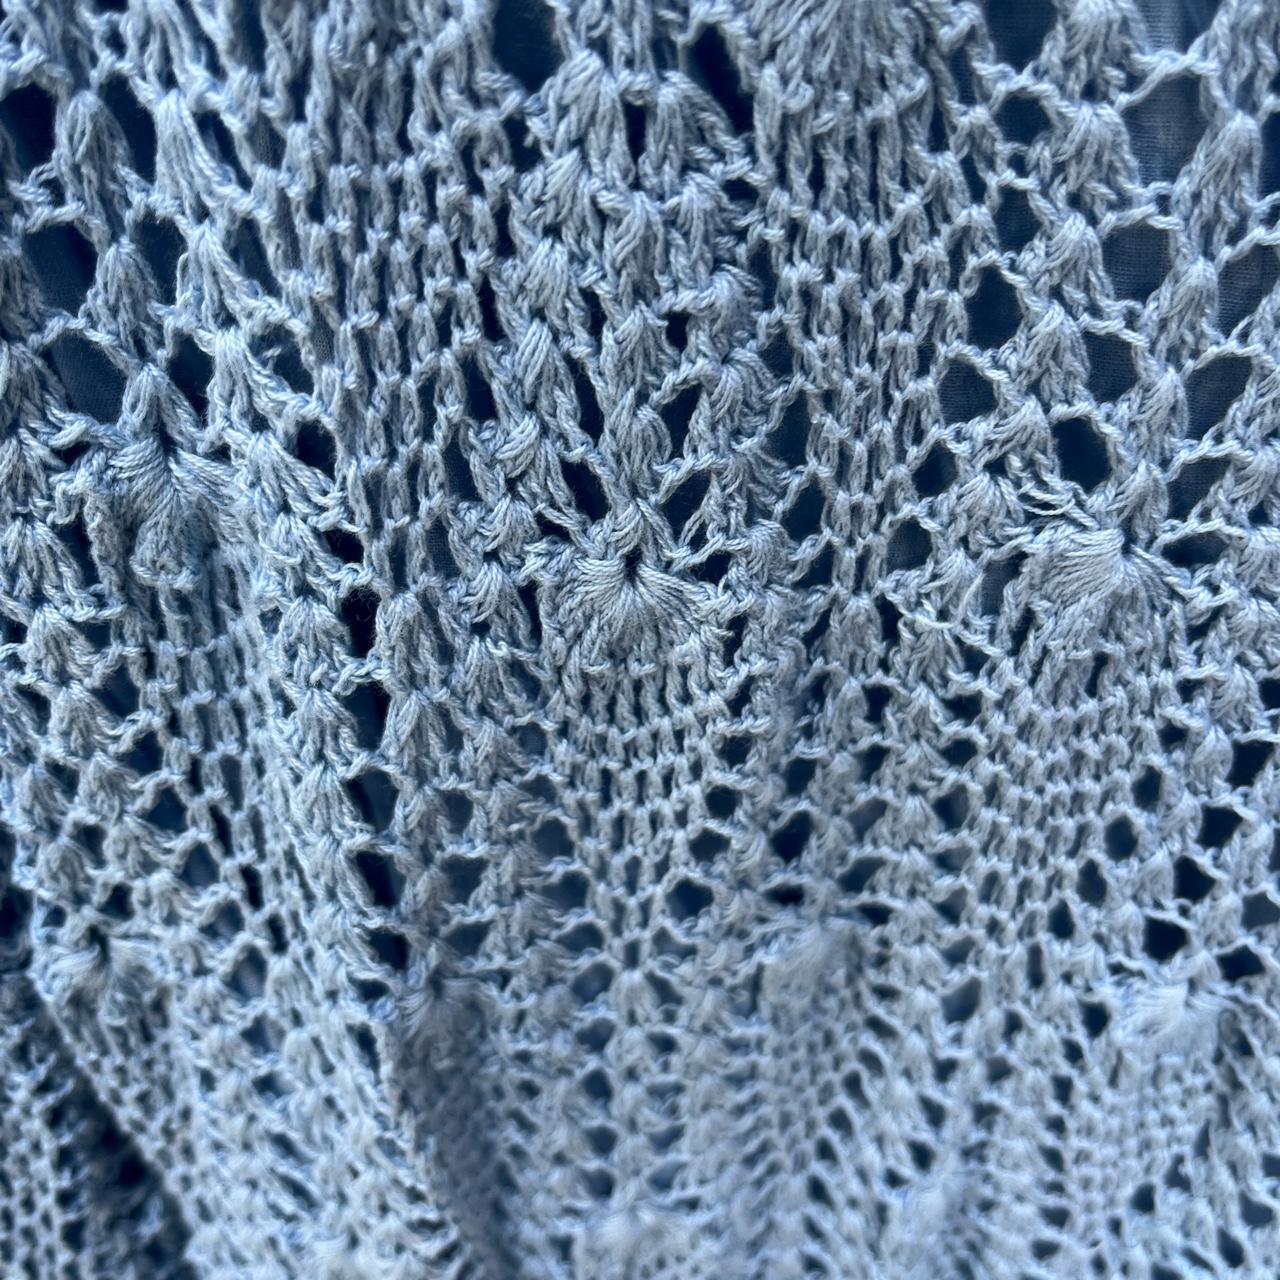 Women’s Blue Skirt y2k 100% Cotton Lace Crochet